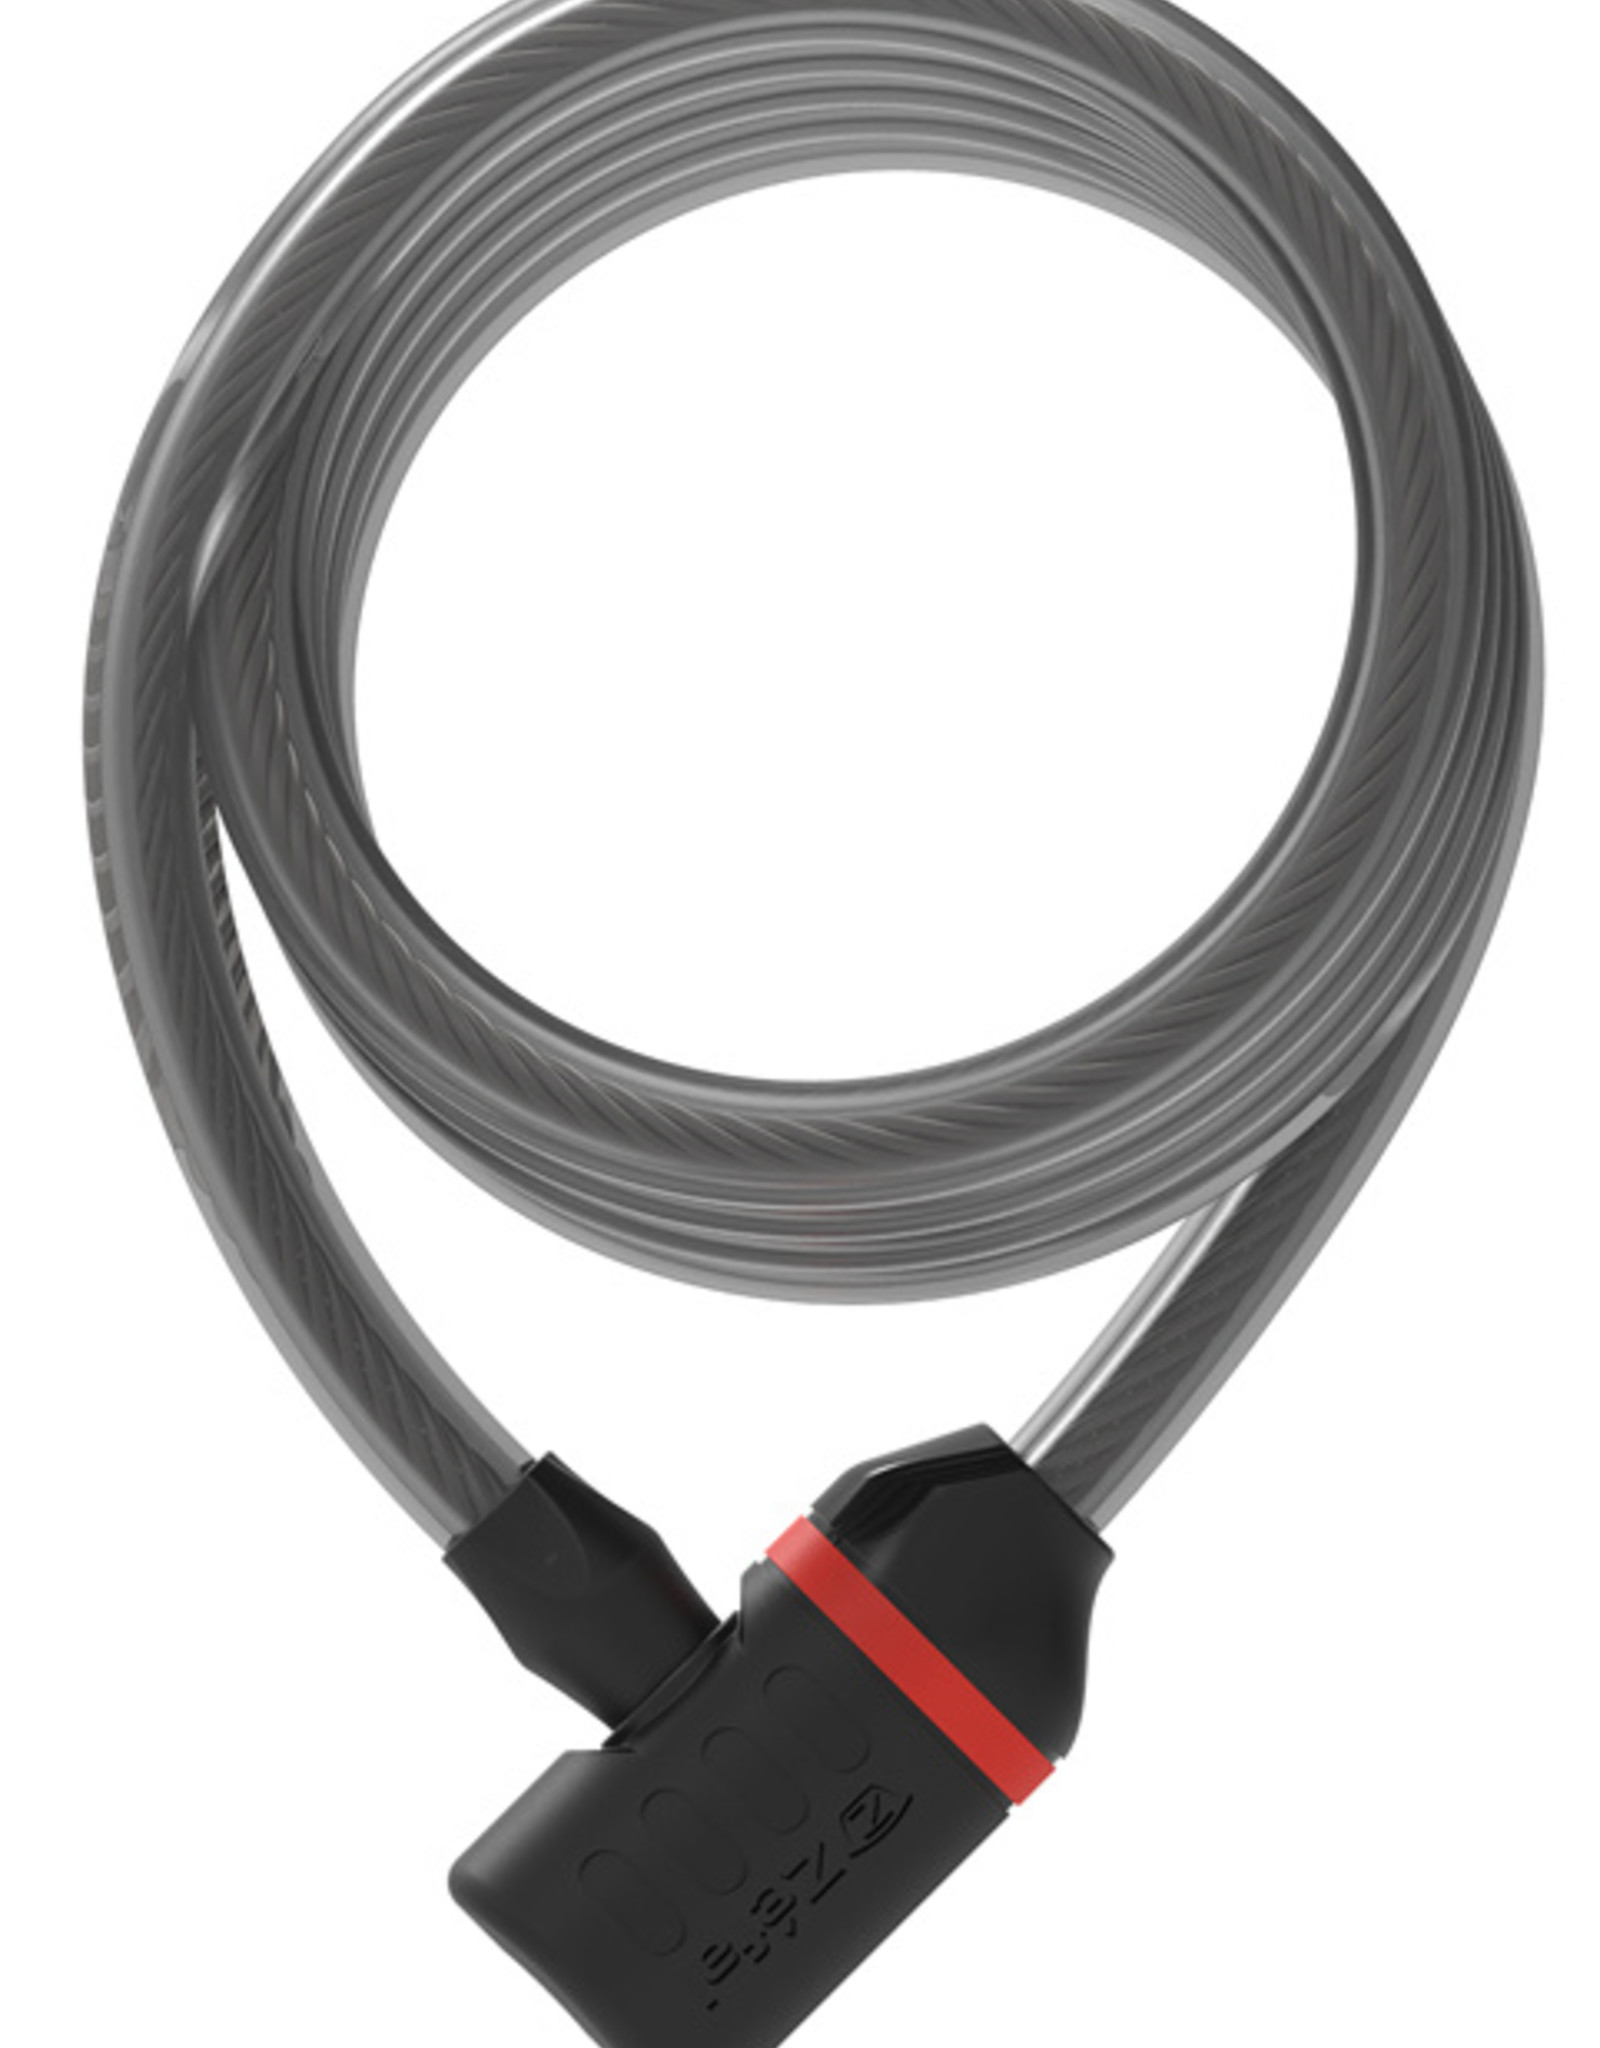 Zefal K-Traz C8 Key Cable Lock 185 x 12mm